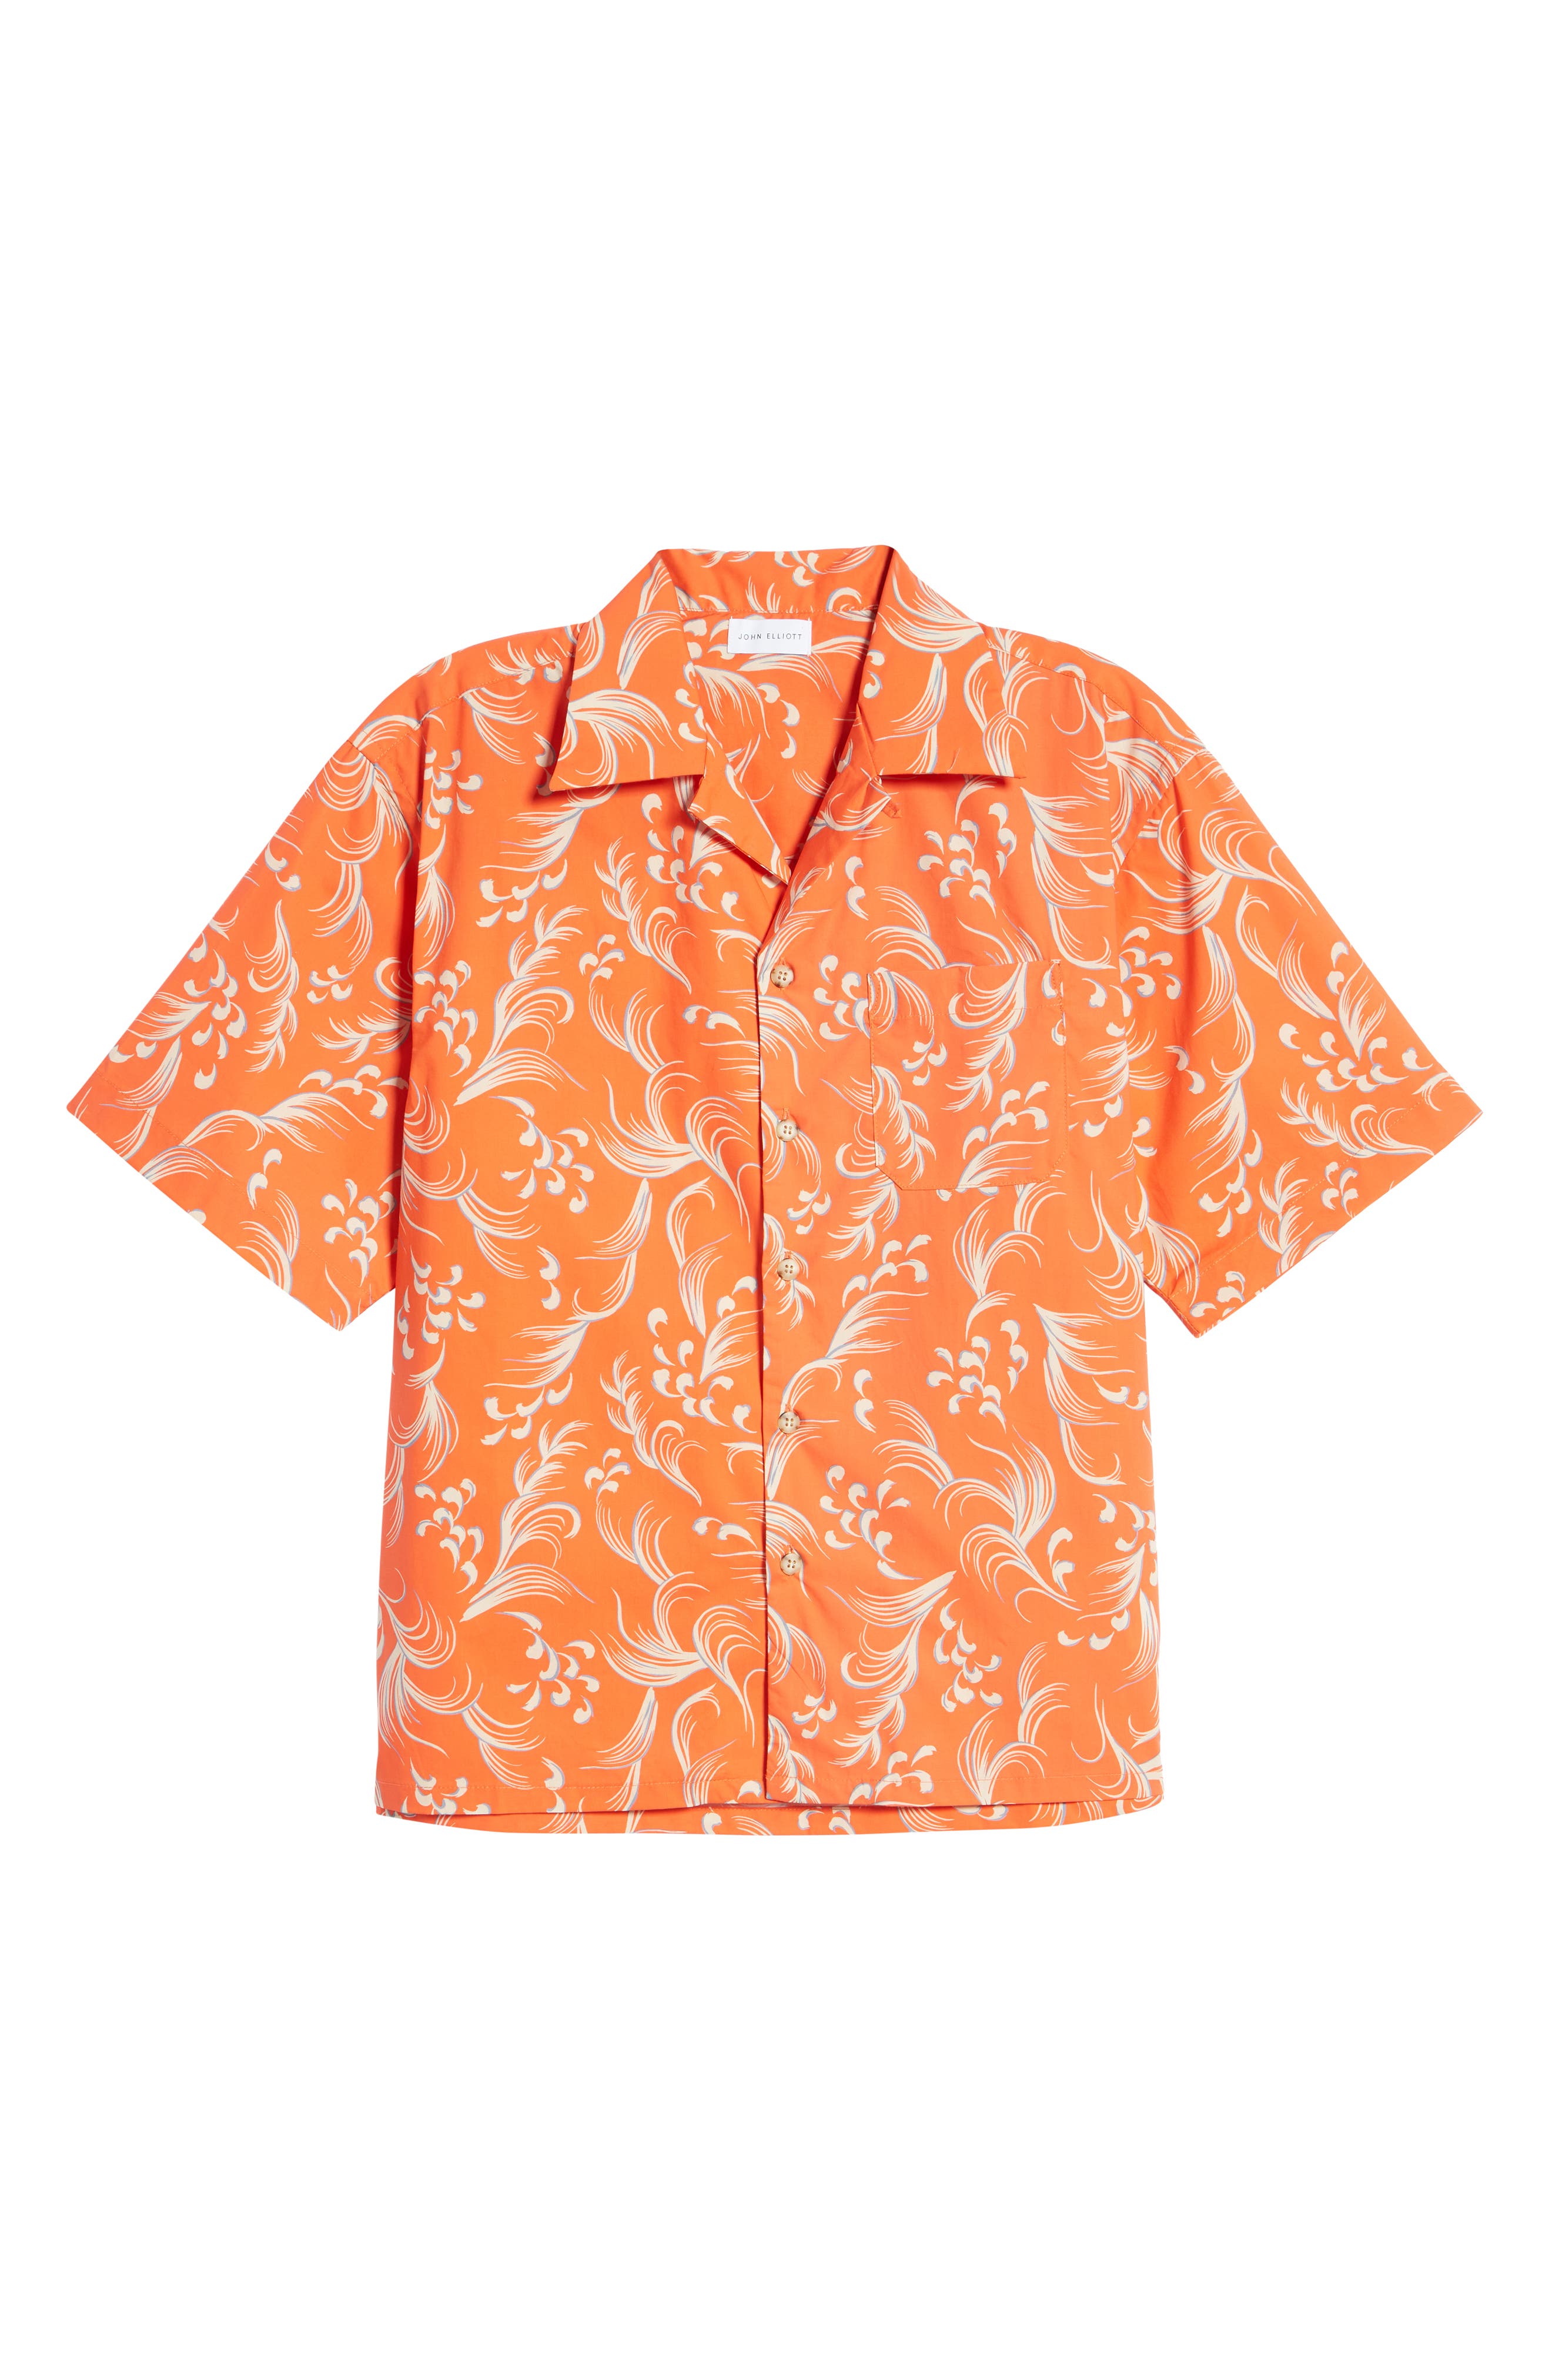 John Elliott Short Sleeve Cotton Button-Up Camp Shirt in Orange at Nordstrom, Size Xx-Large